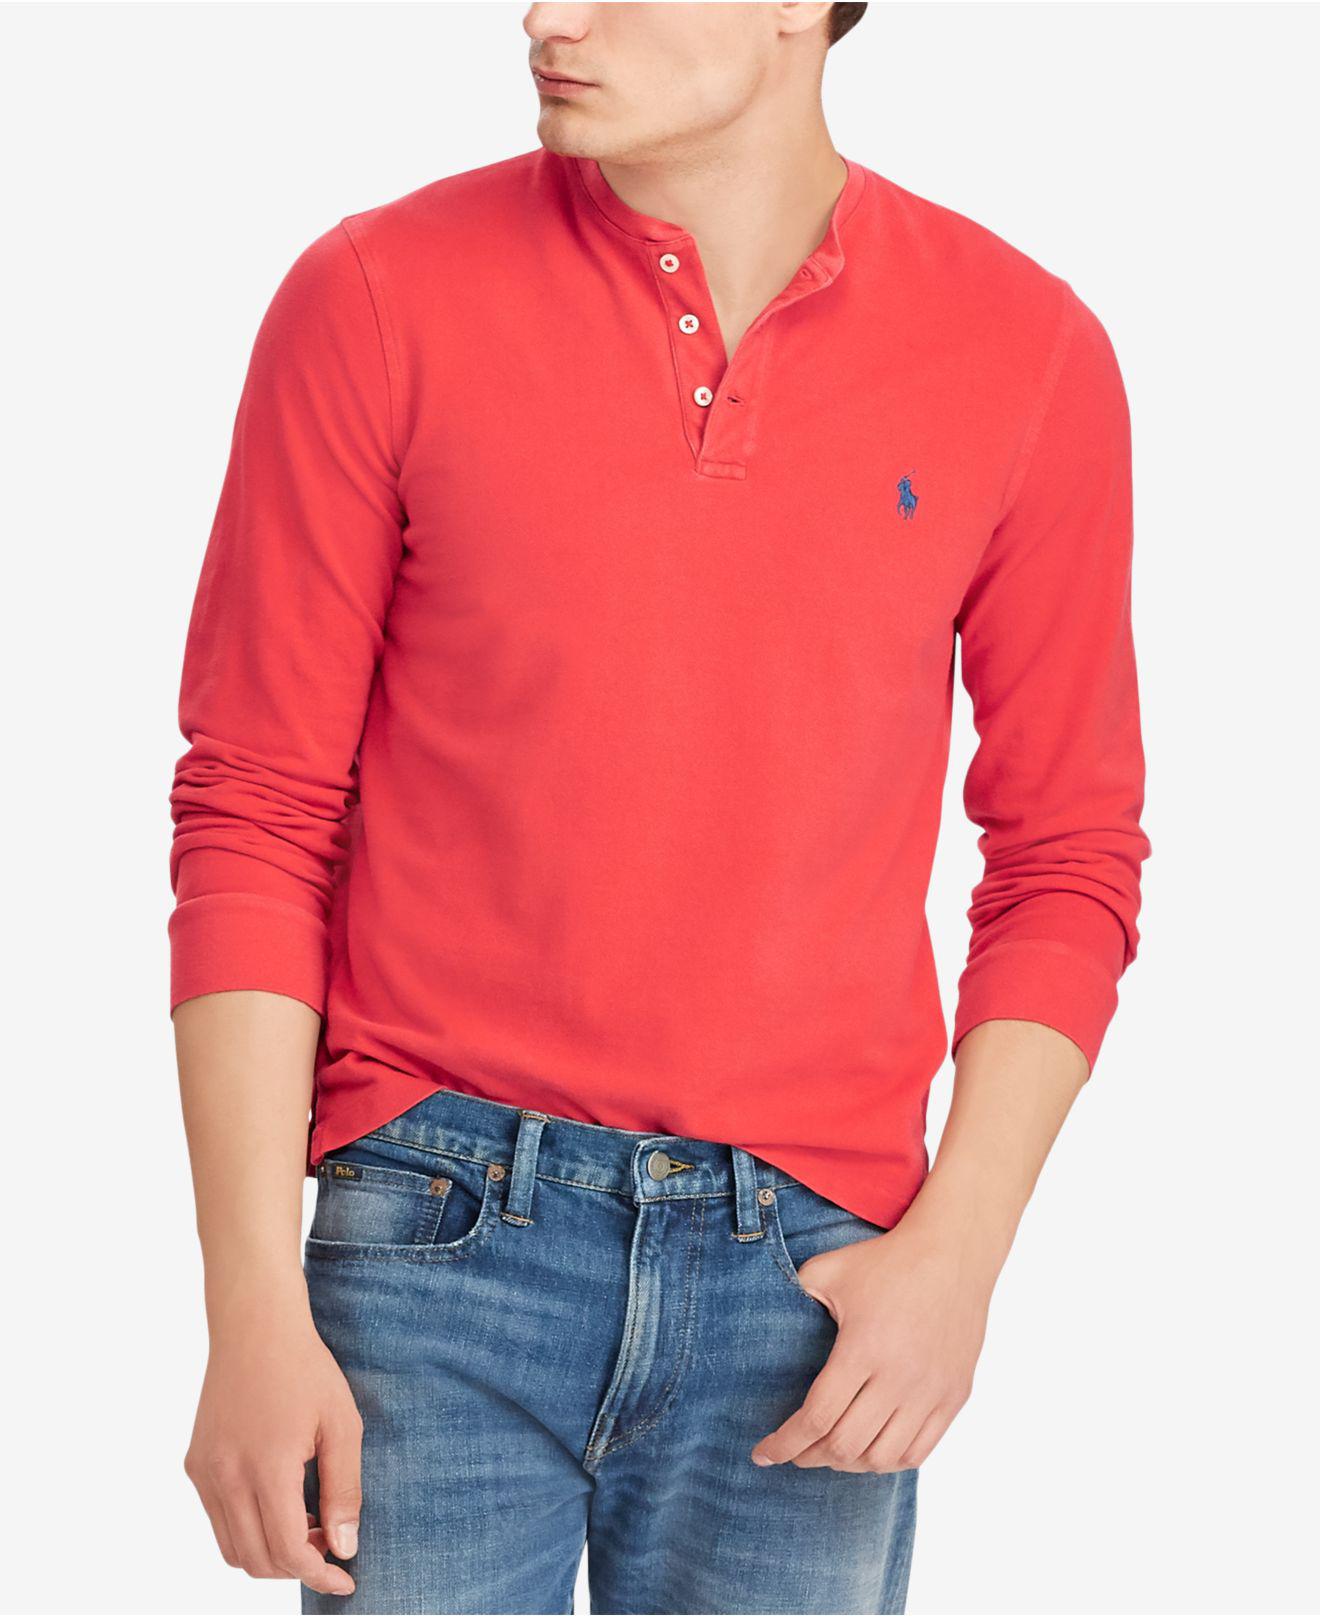 Polo Ralph Lauren Featherweight Cotton Henley Shirt in Red for Men - Lyst